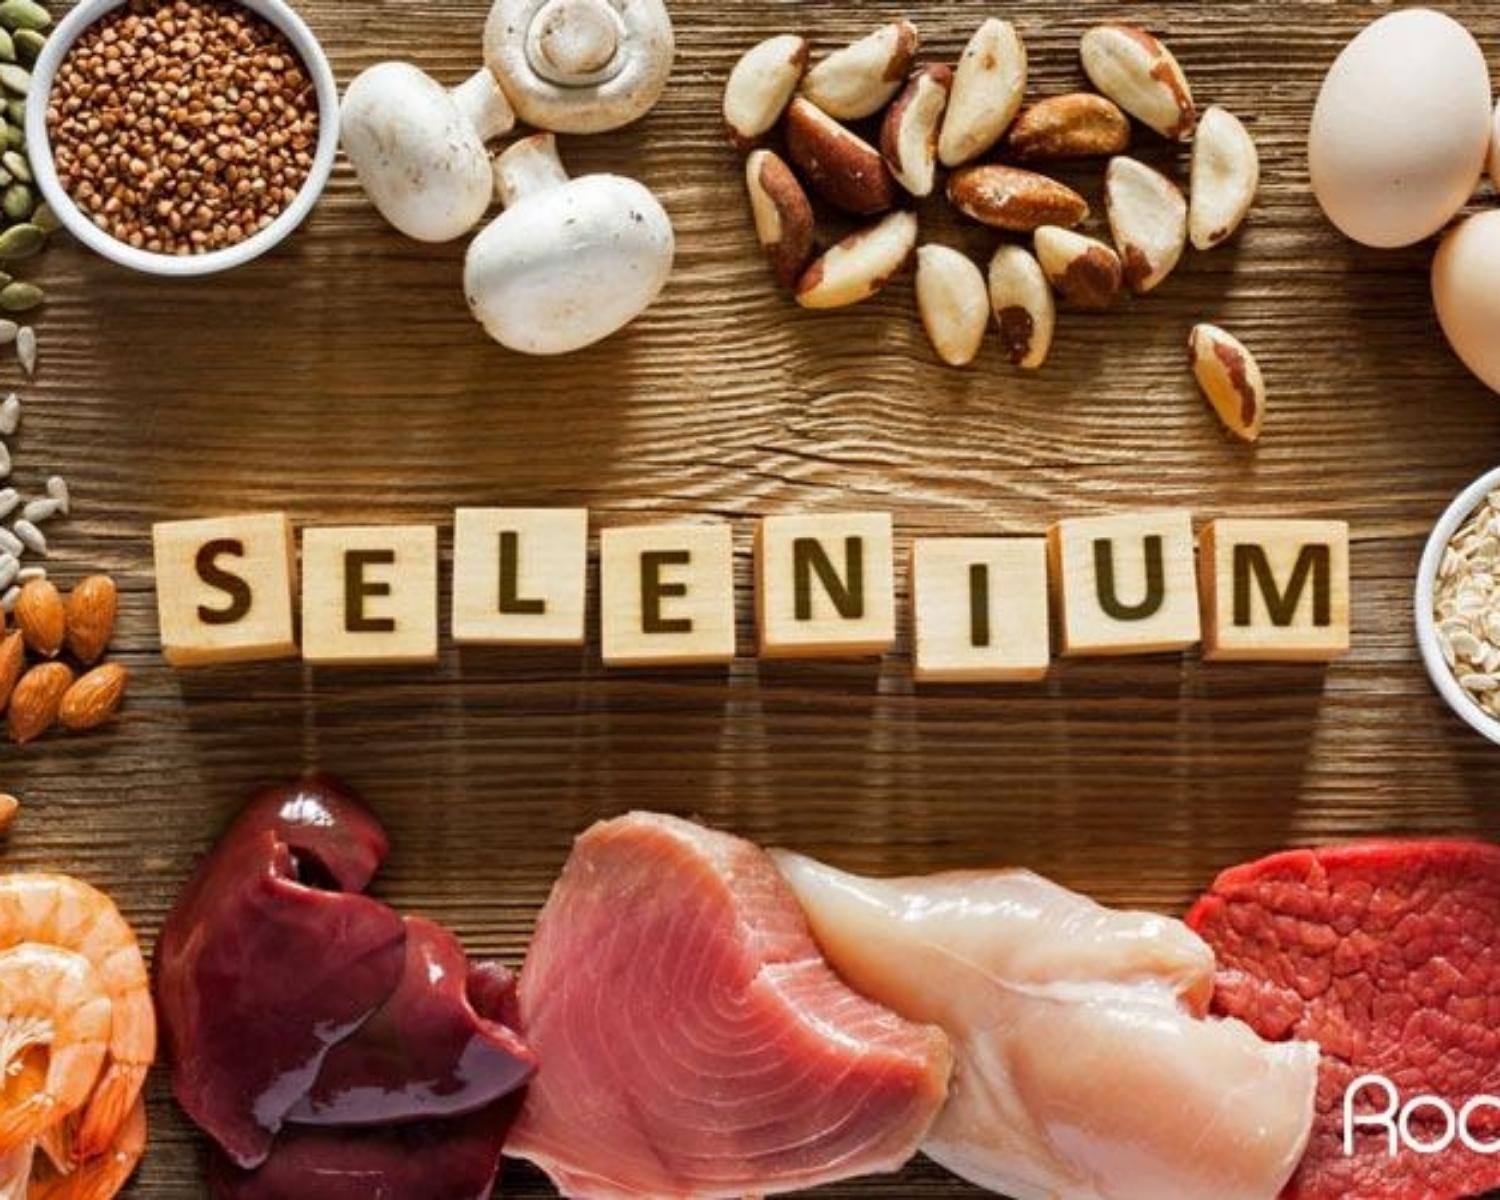 7. Selenium